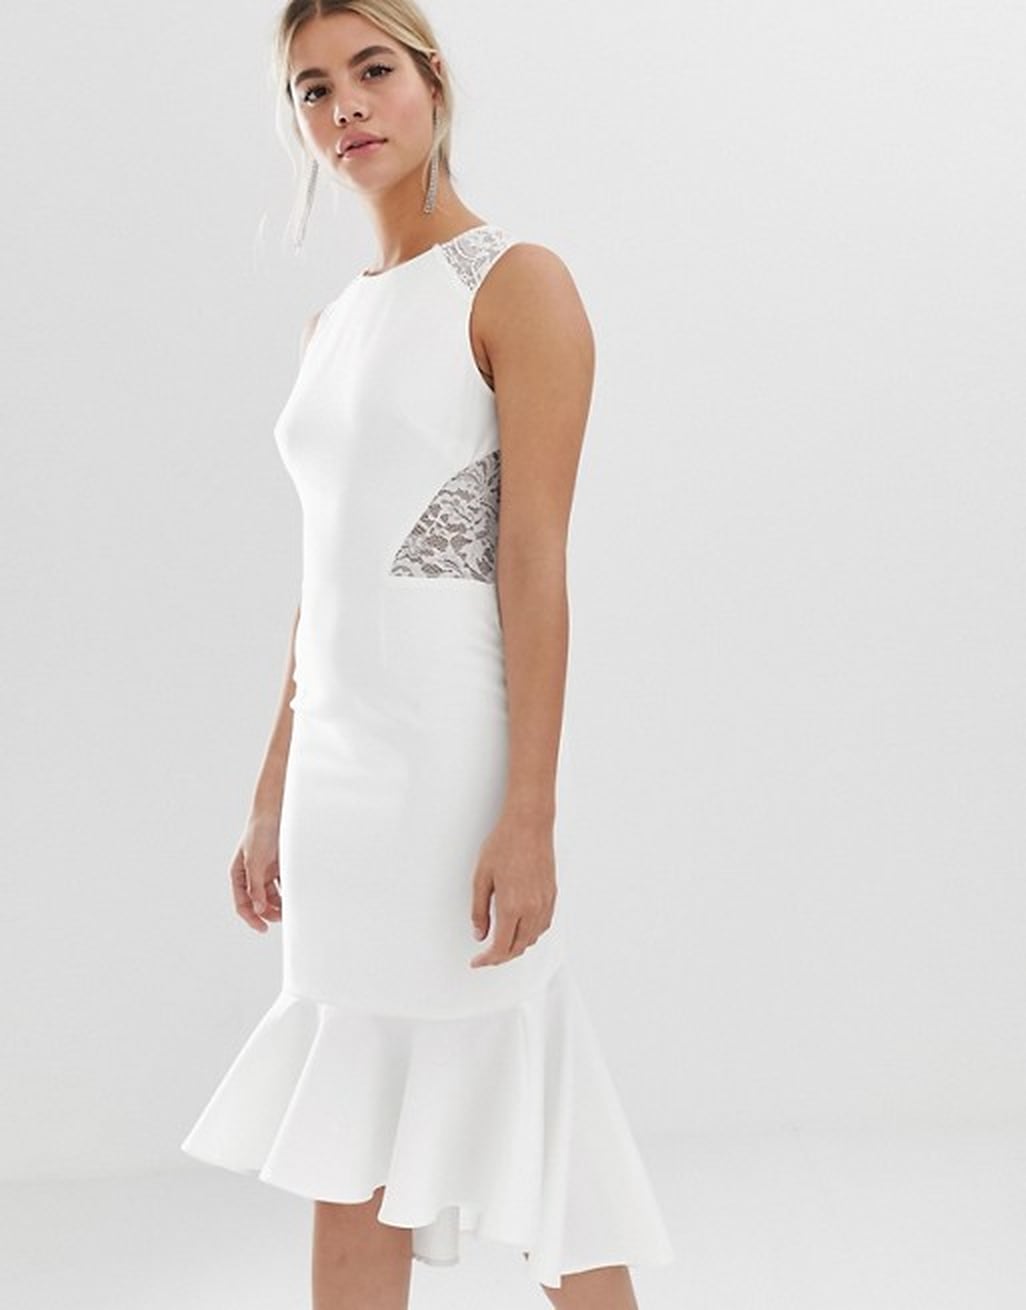 These Cheap ASOS Wedding Dresses Are Super Chic | POPSUGAR Fashion